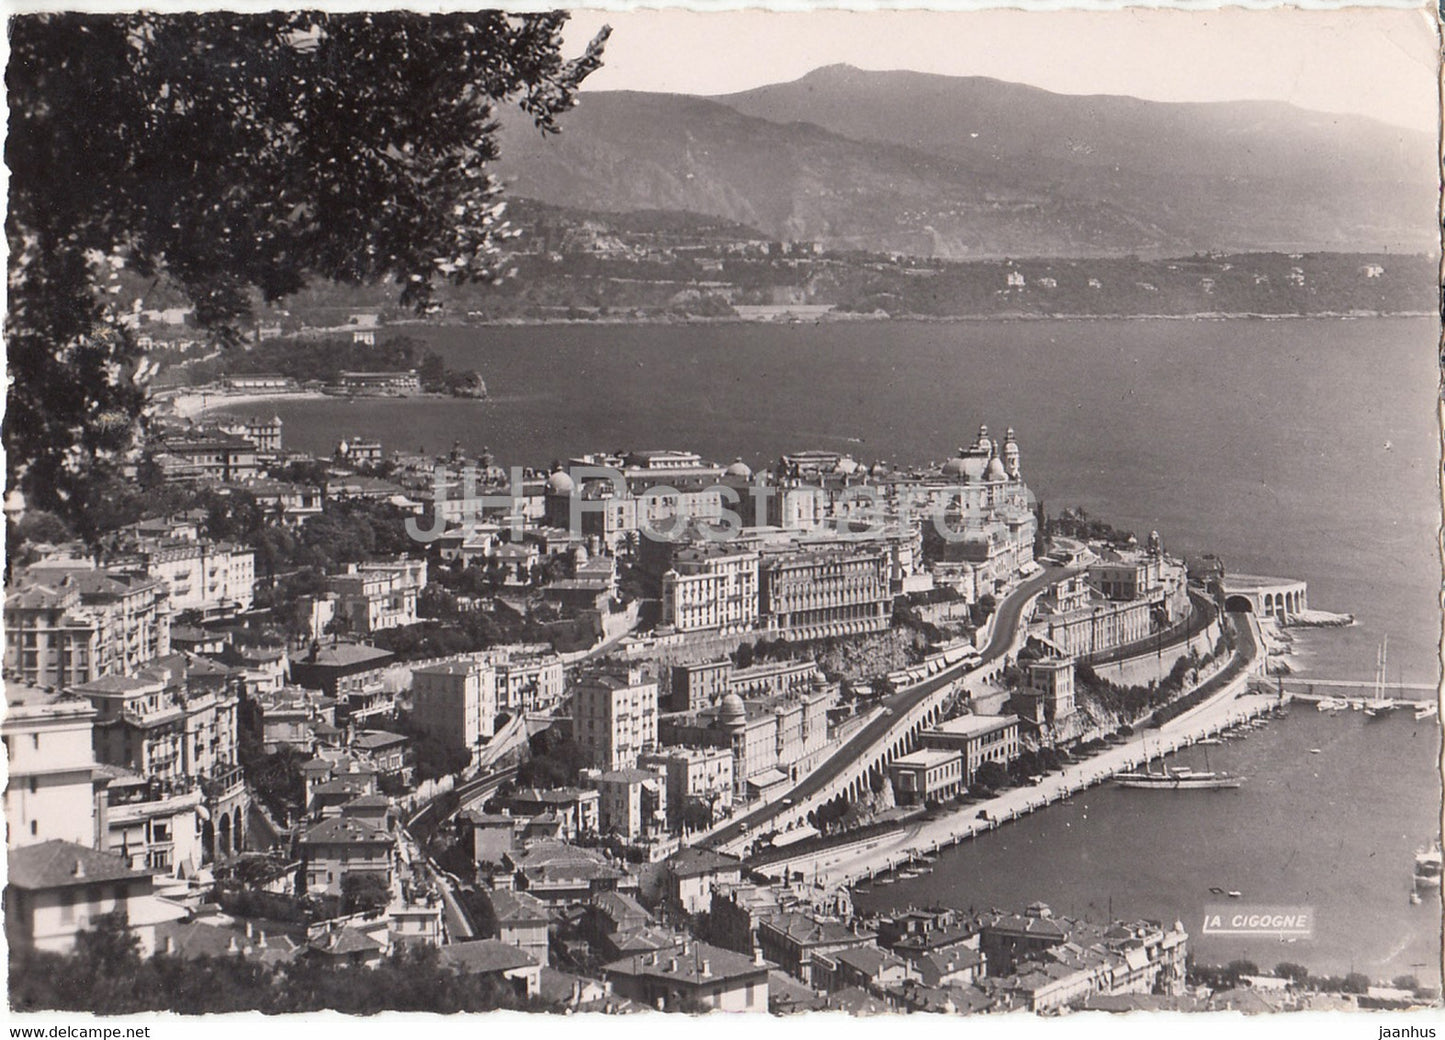 Monte Carlo - Vue Generale - 1494 - old postcard - 1951 - Monaco - used - JH Postcards